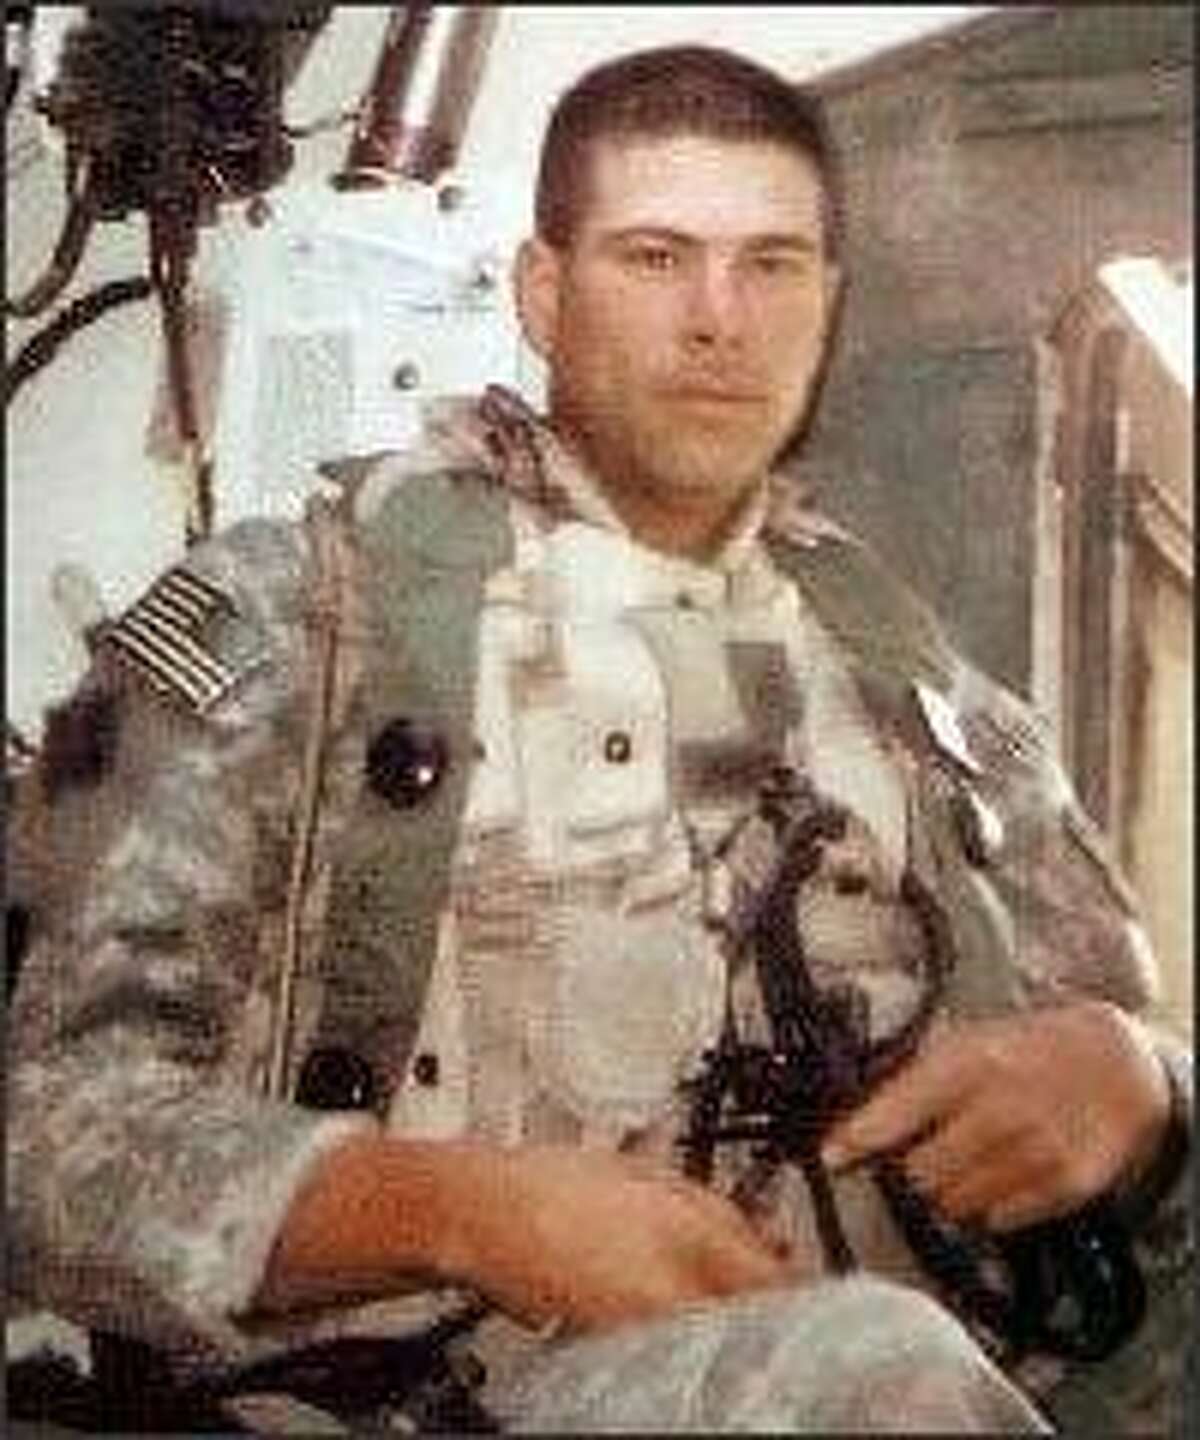 Army Staff Sgt. Christopher R. Morningstar, 27, a San Antonio native, was killed in action in Al Husayniyah, Iraq on Feb. 5, 2006.